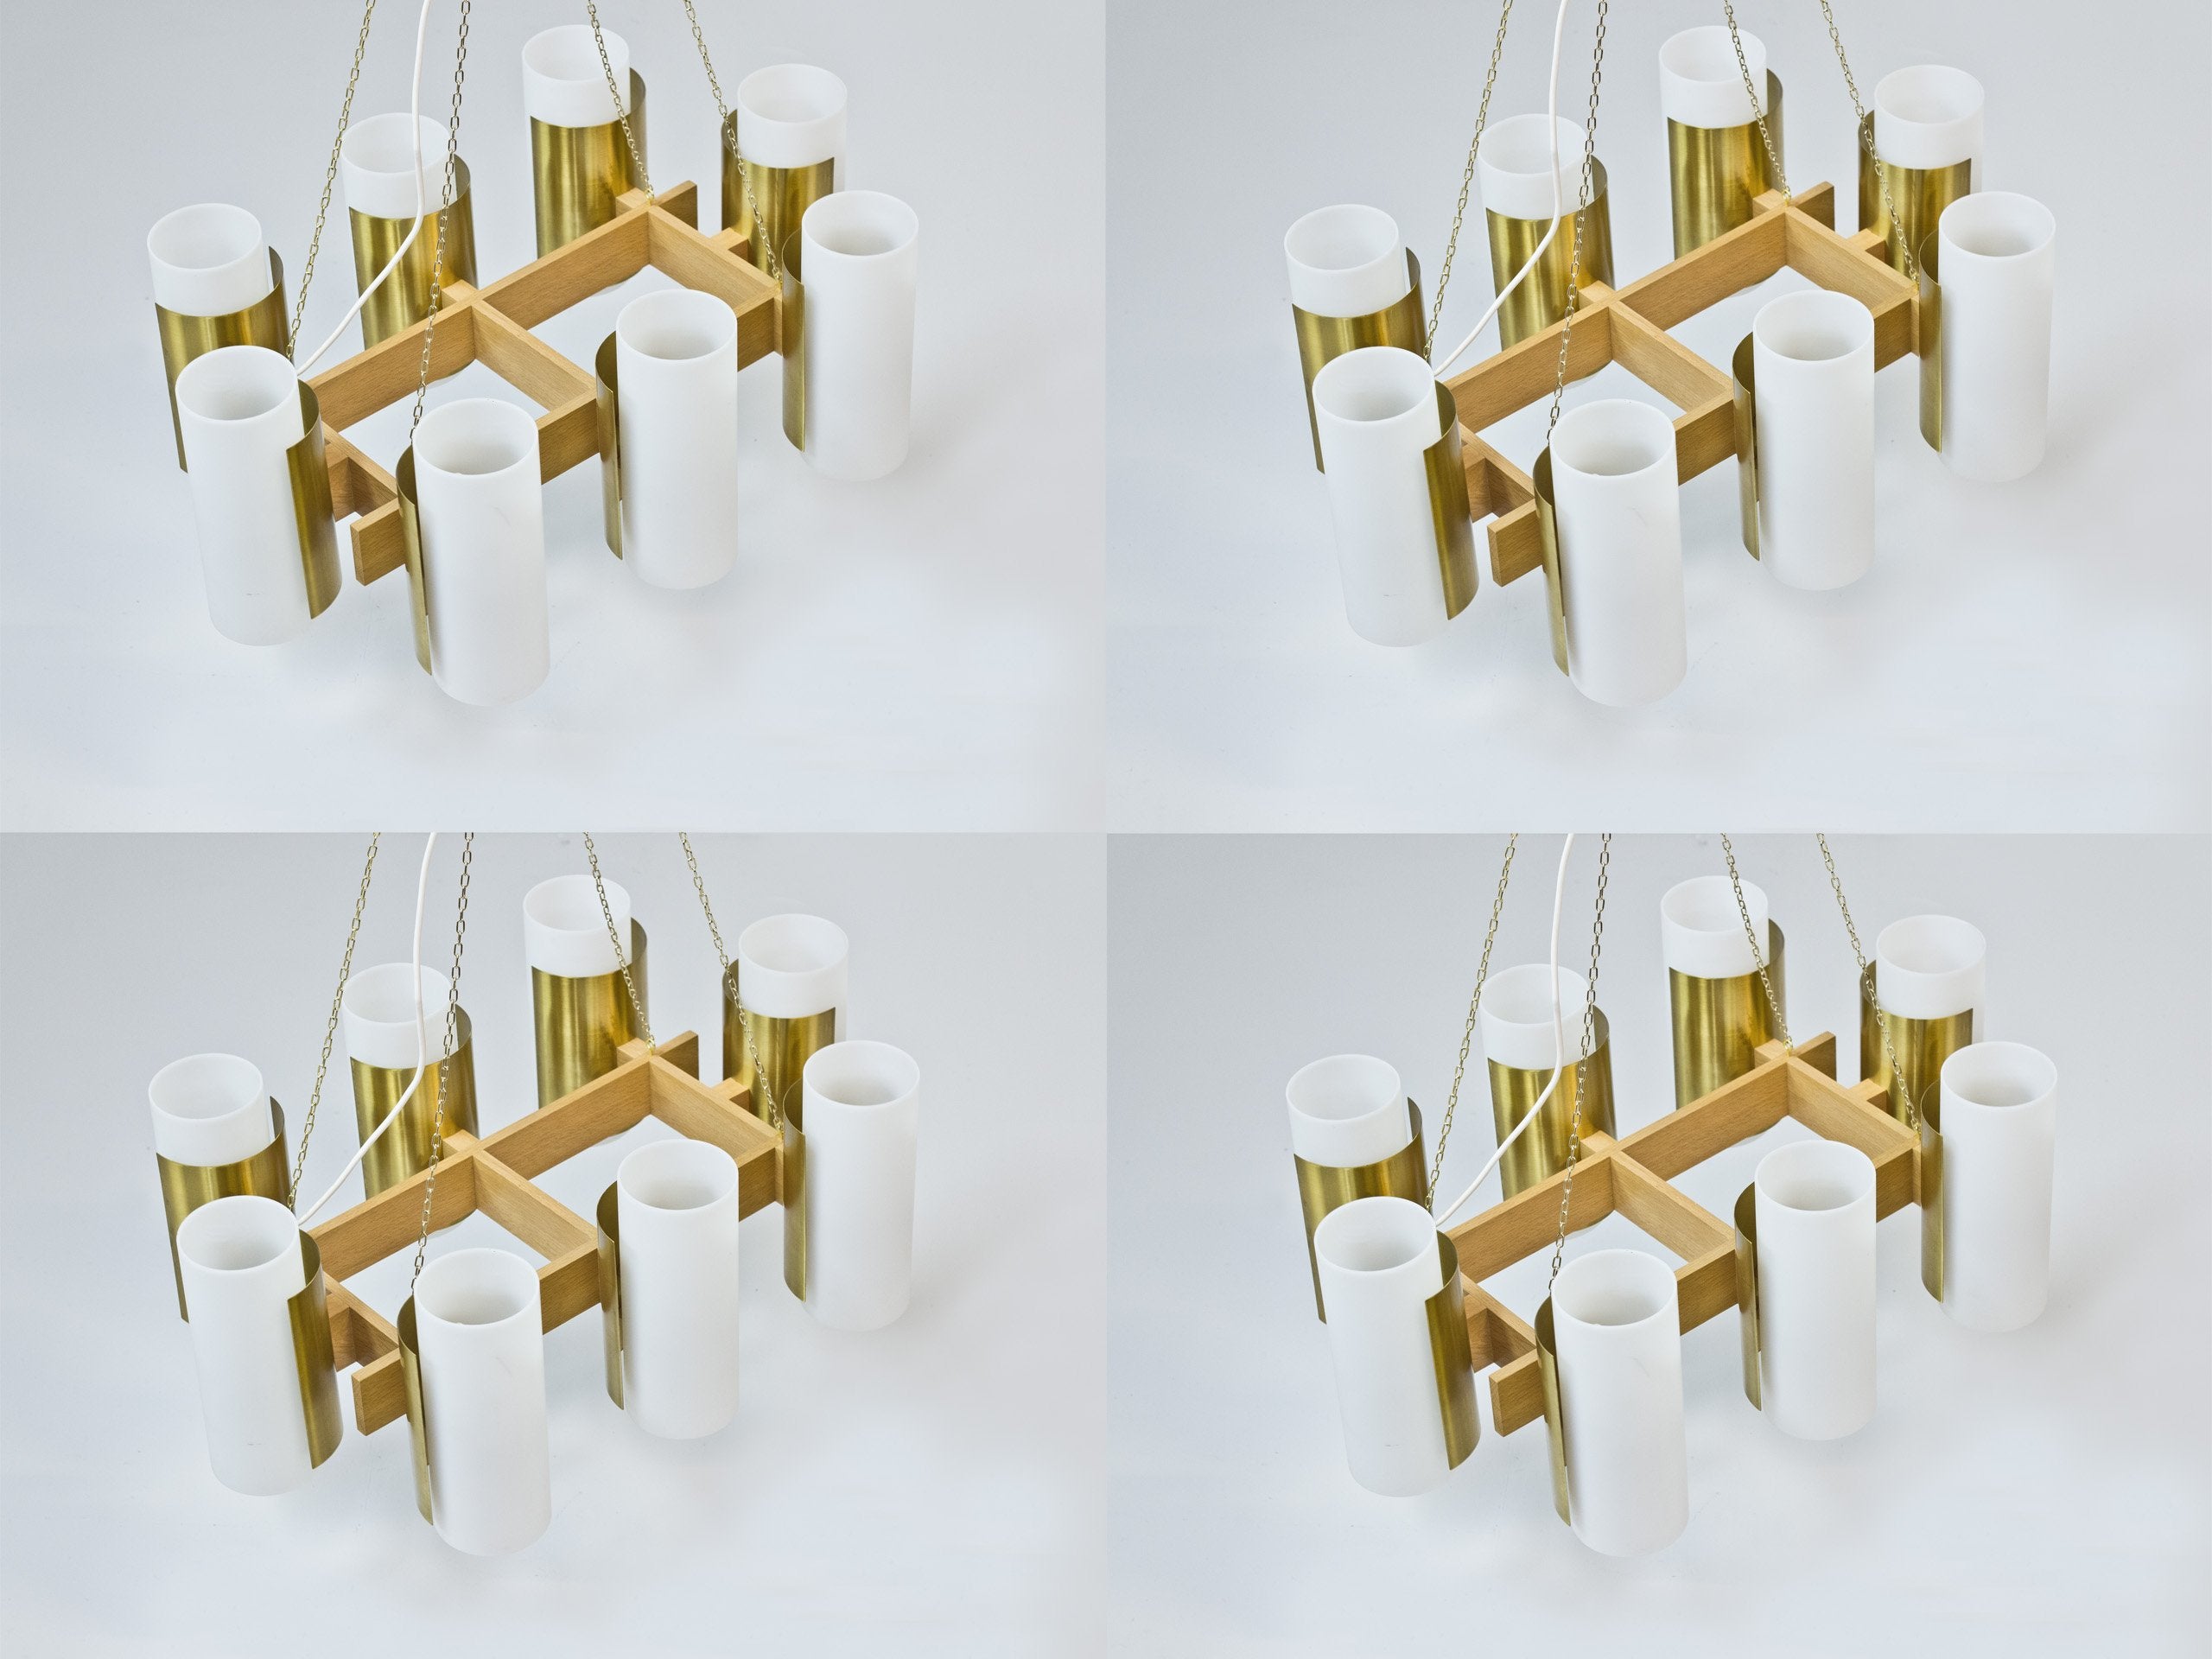 Set of unique 1950s chandeliers by Sten Carlquist